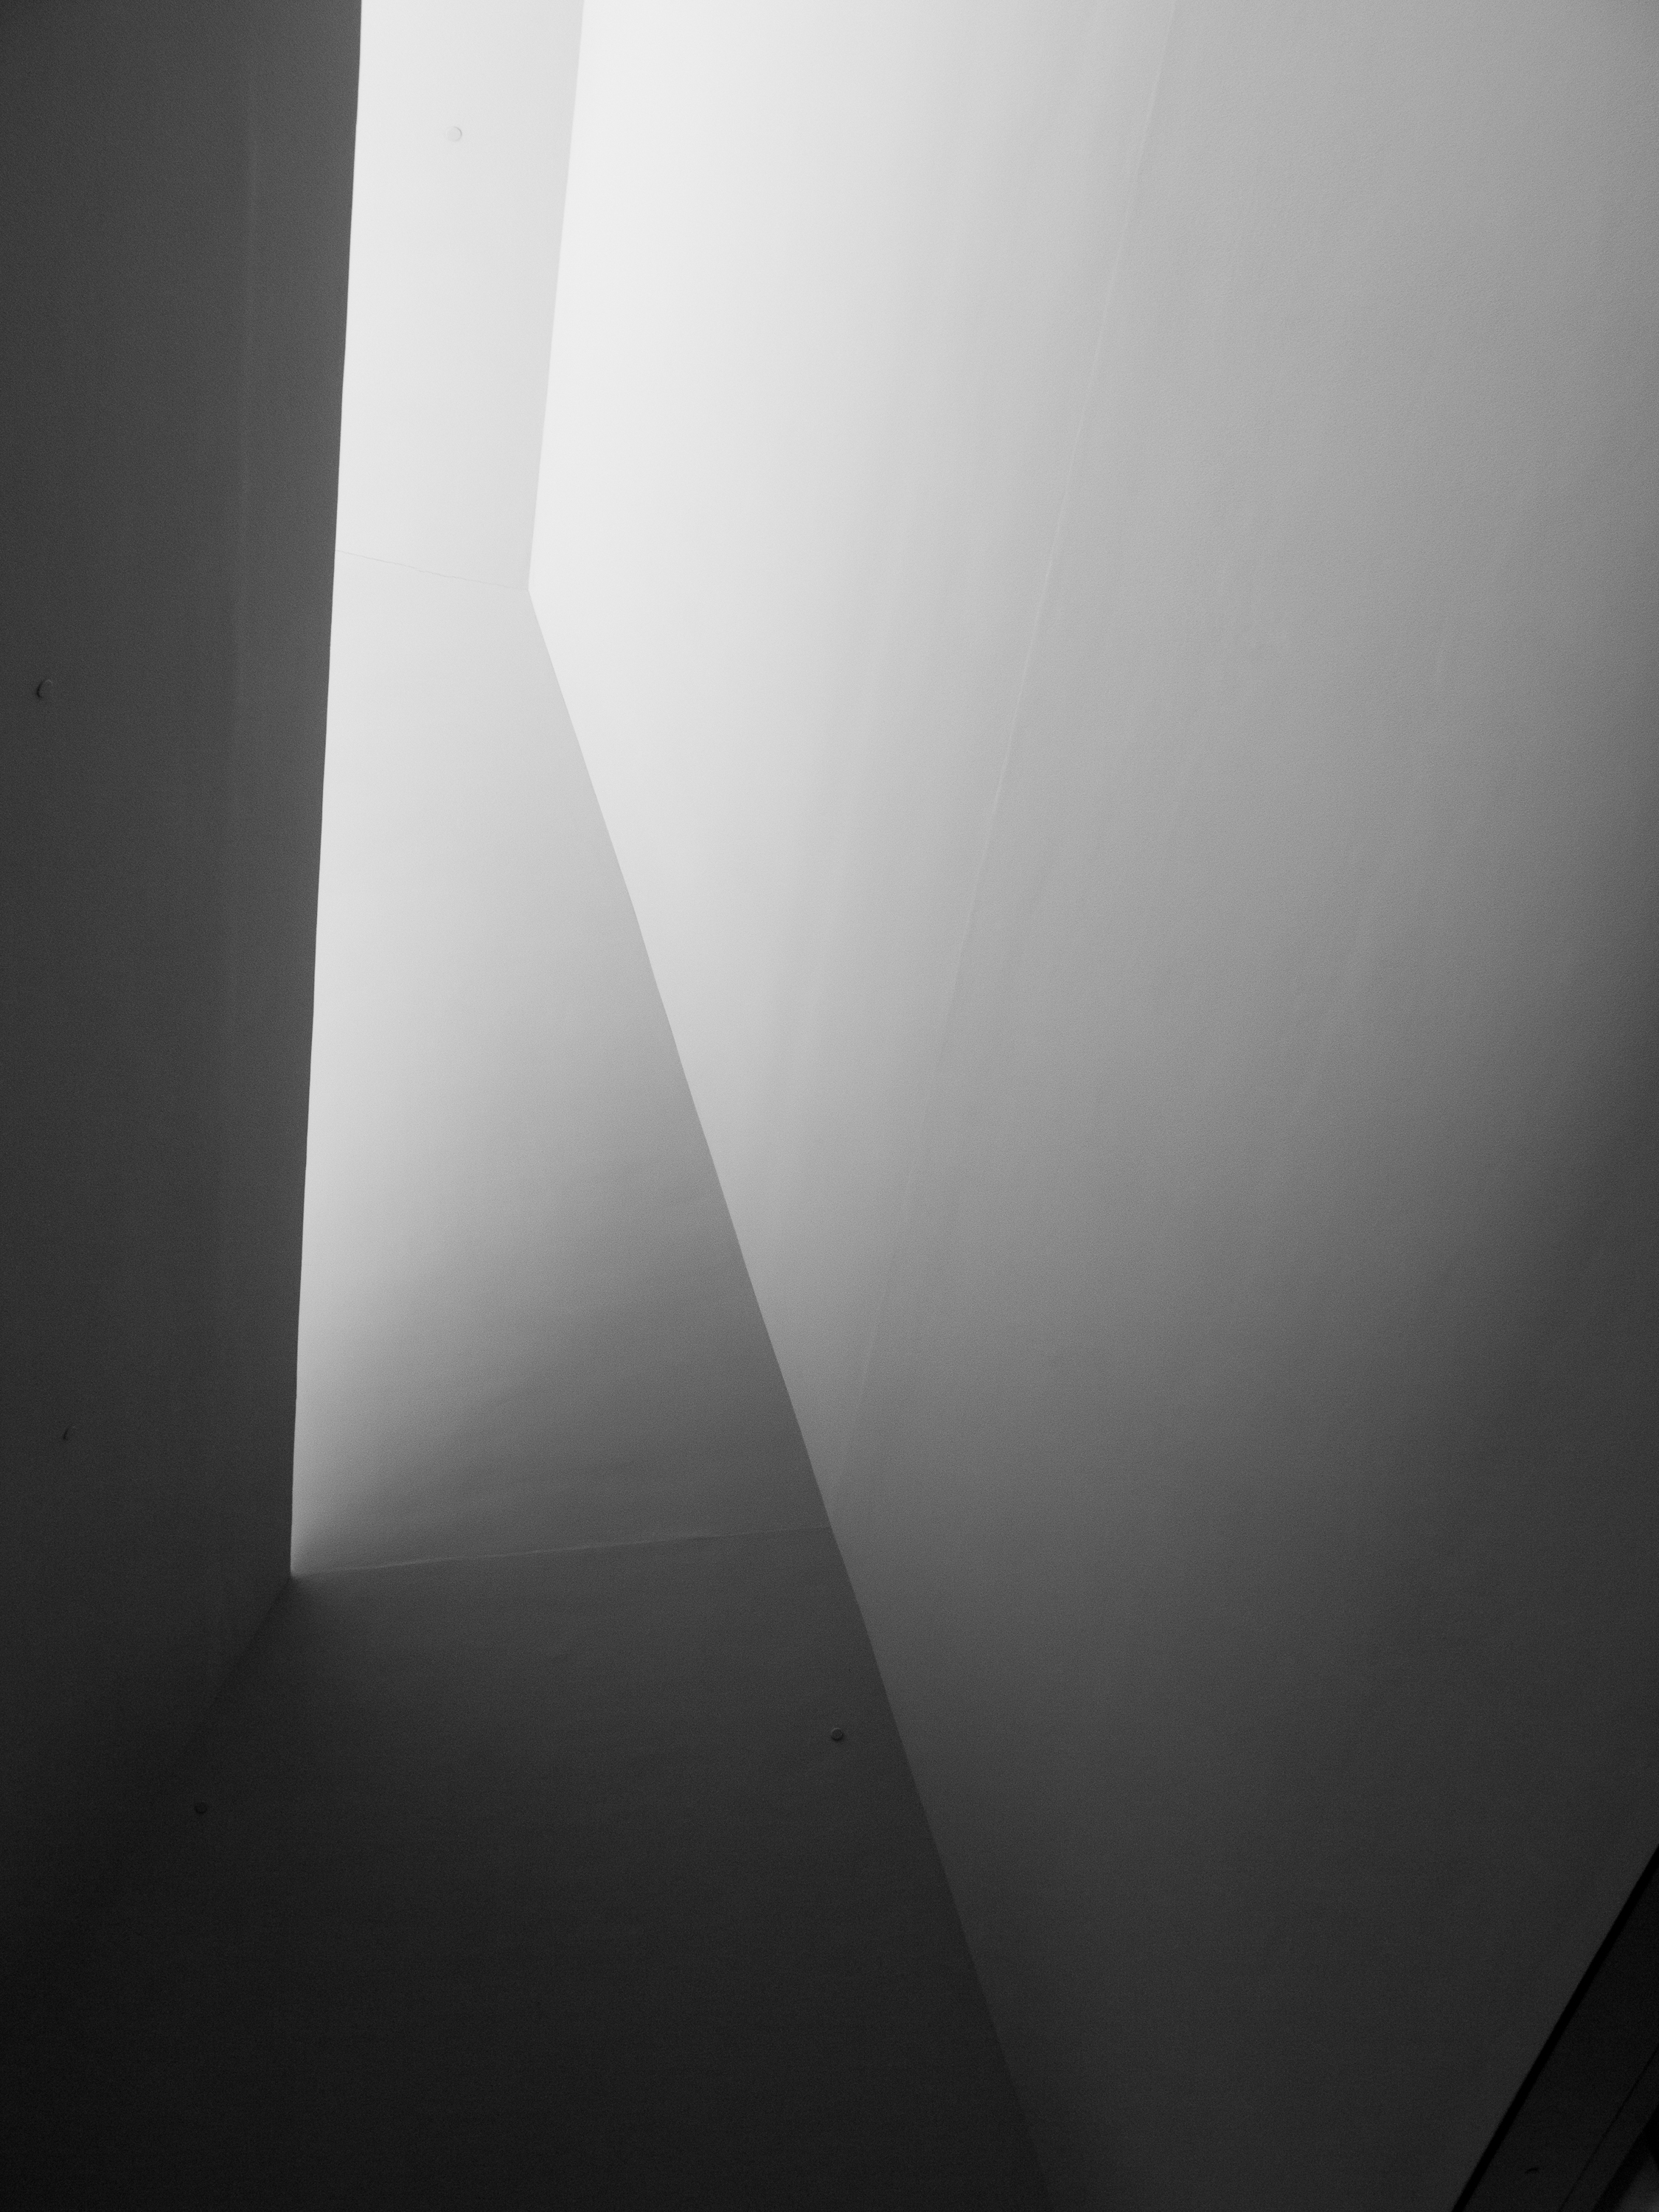 Shadows in stairwell, Philadelphia (2012)